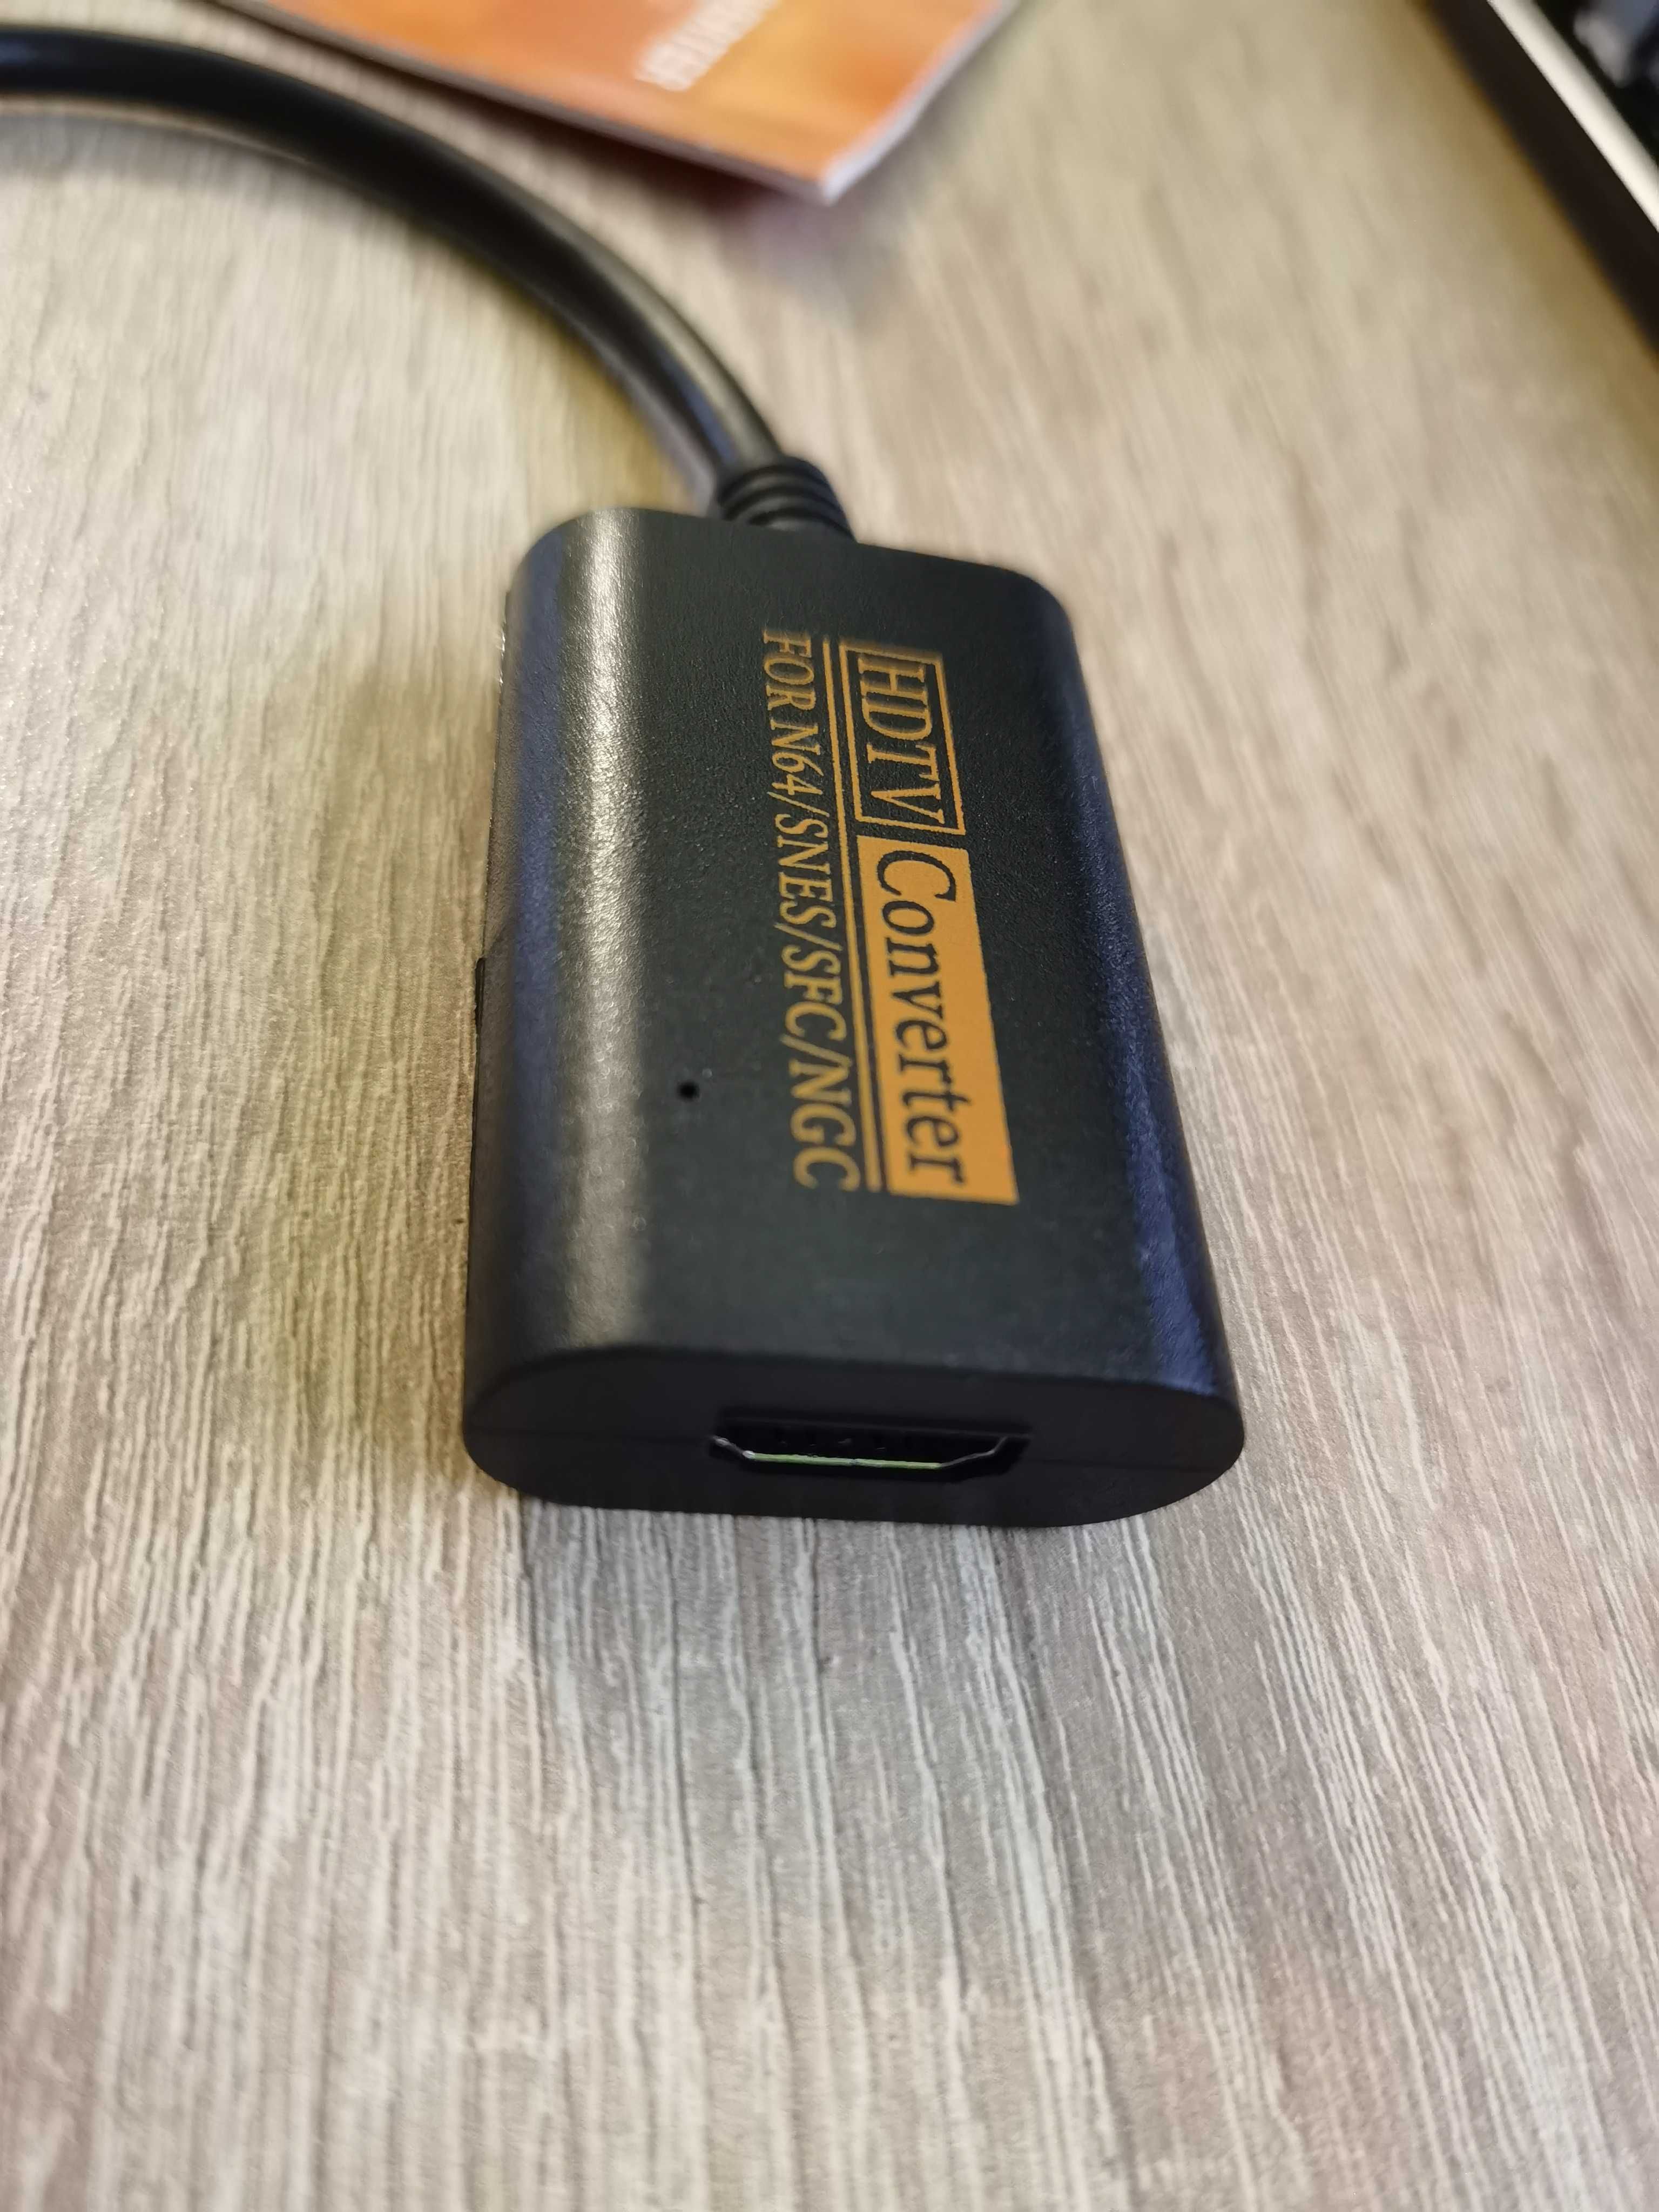 Nintendo 64 към HDMI конвертор / адаптер